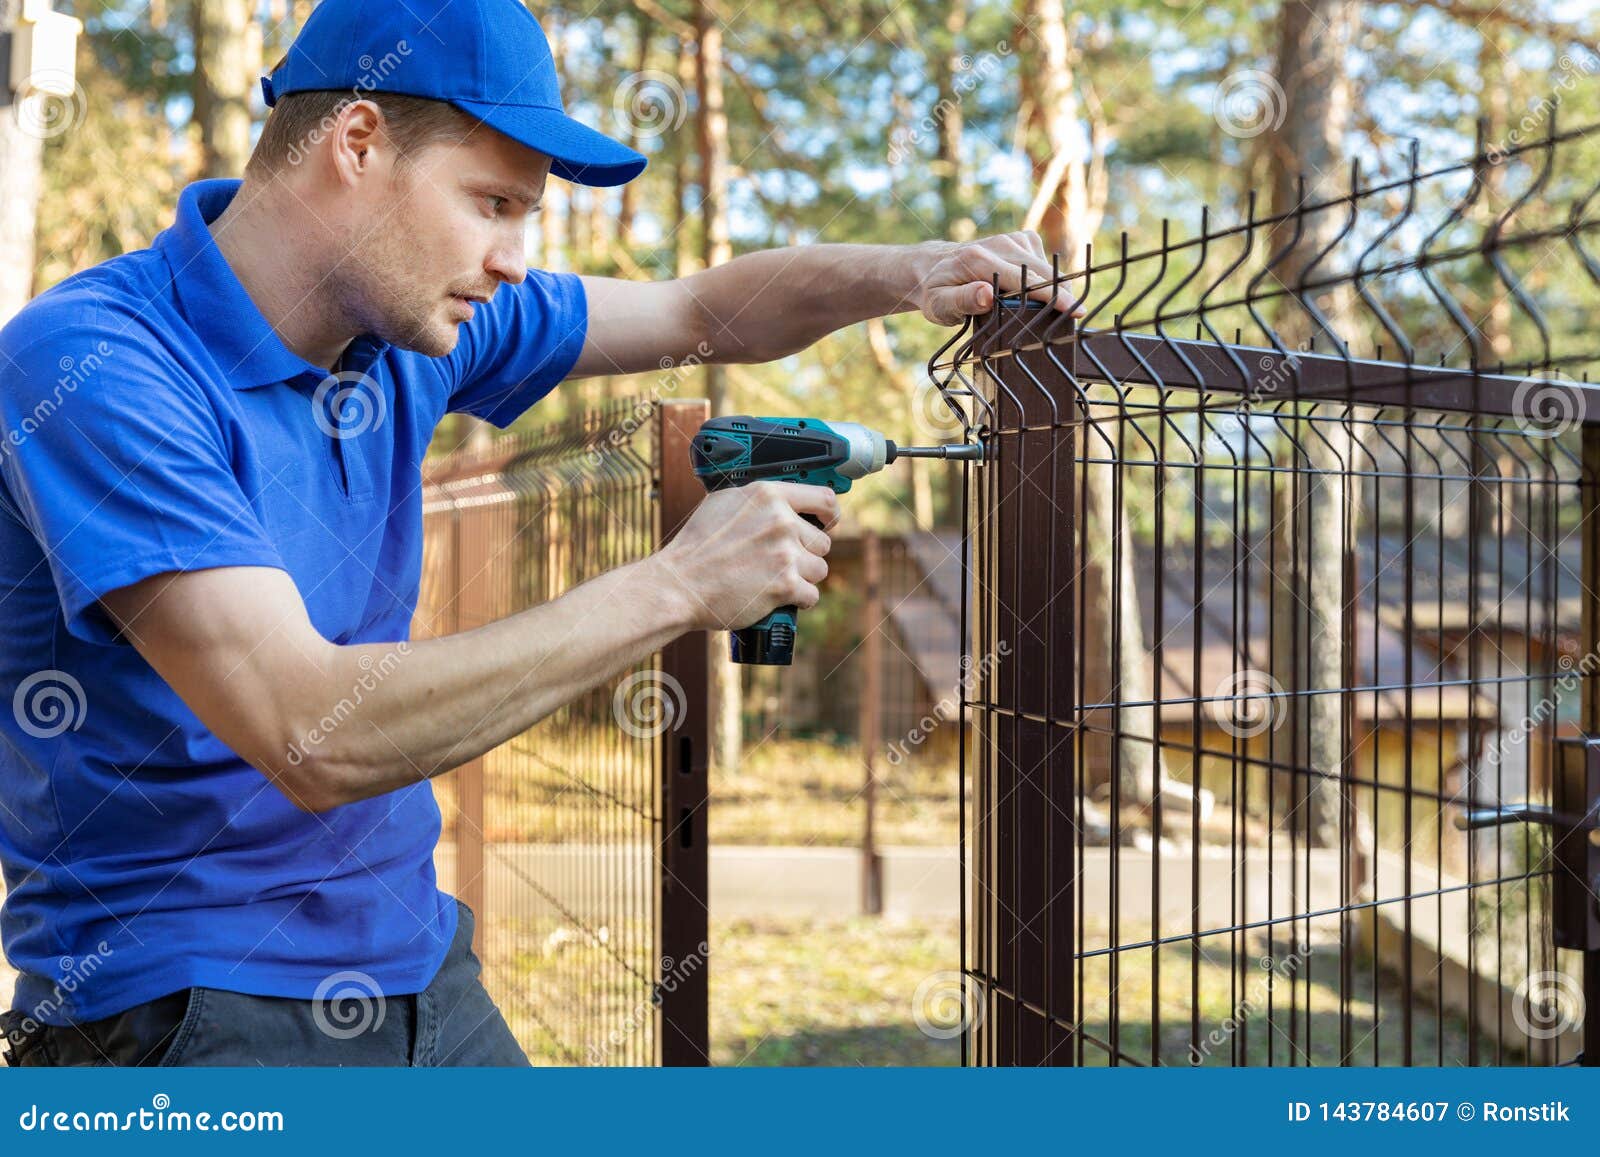 property territory fencing - man screws metal fence panel